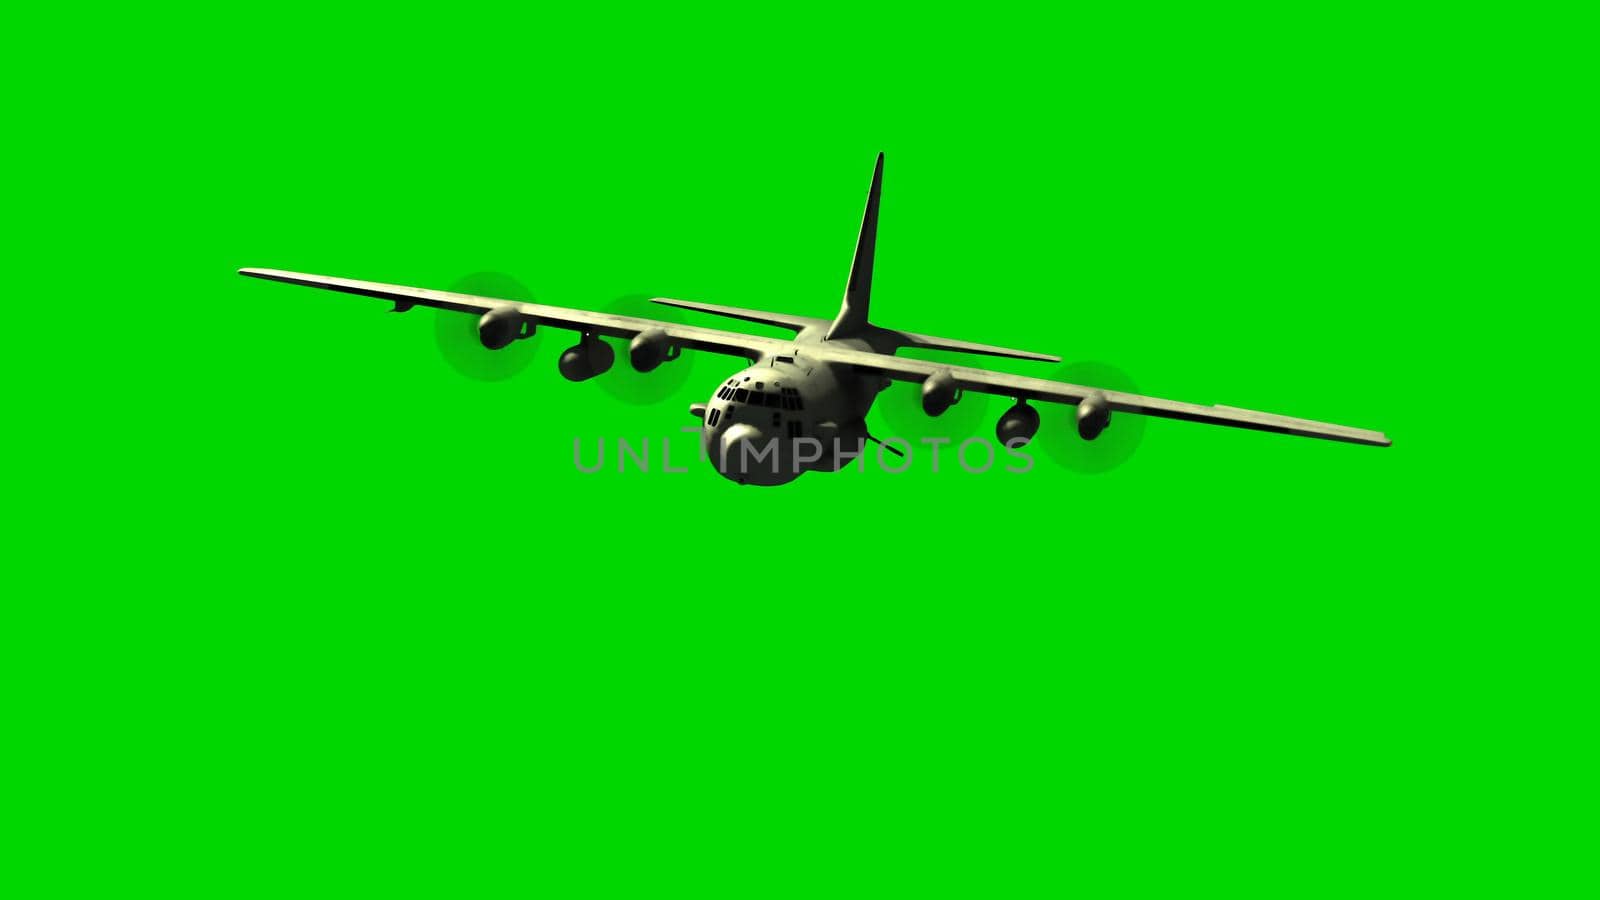 Lockheed c-130 military transport aircraft in flight on green screen